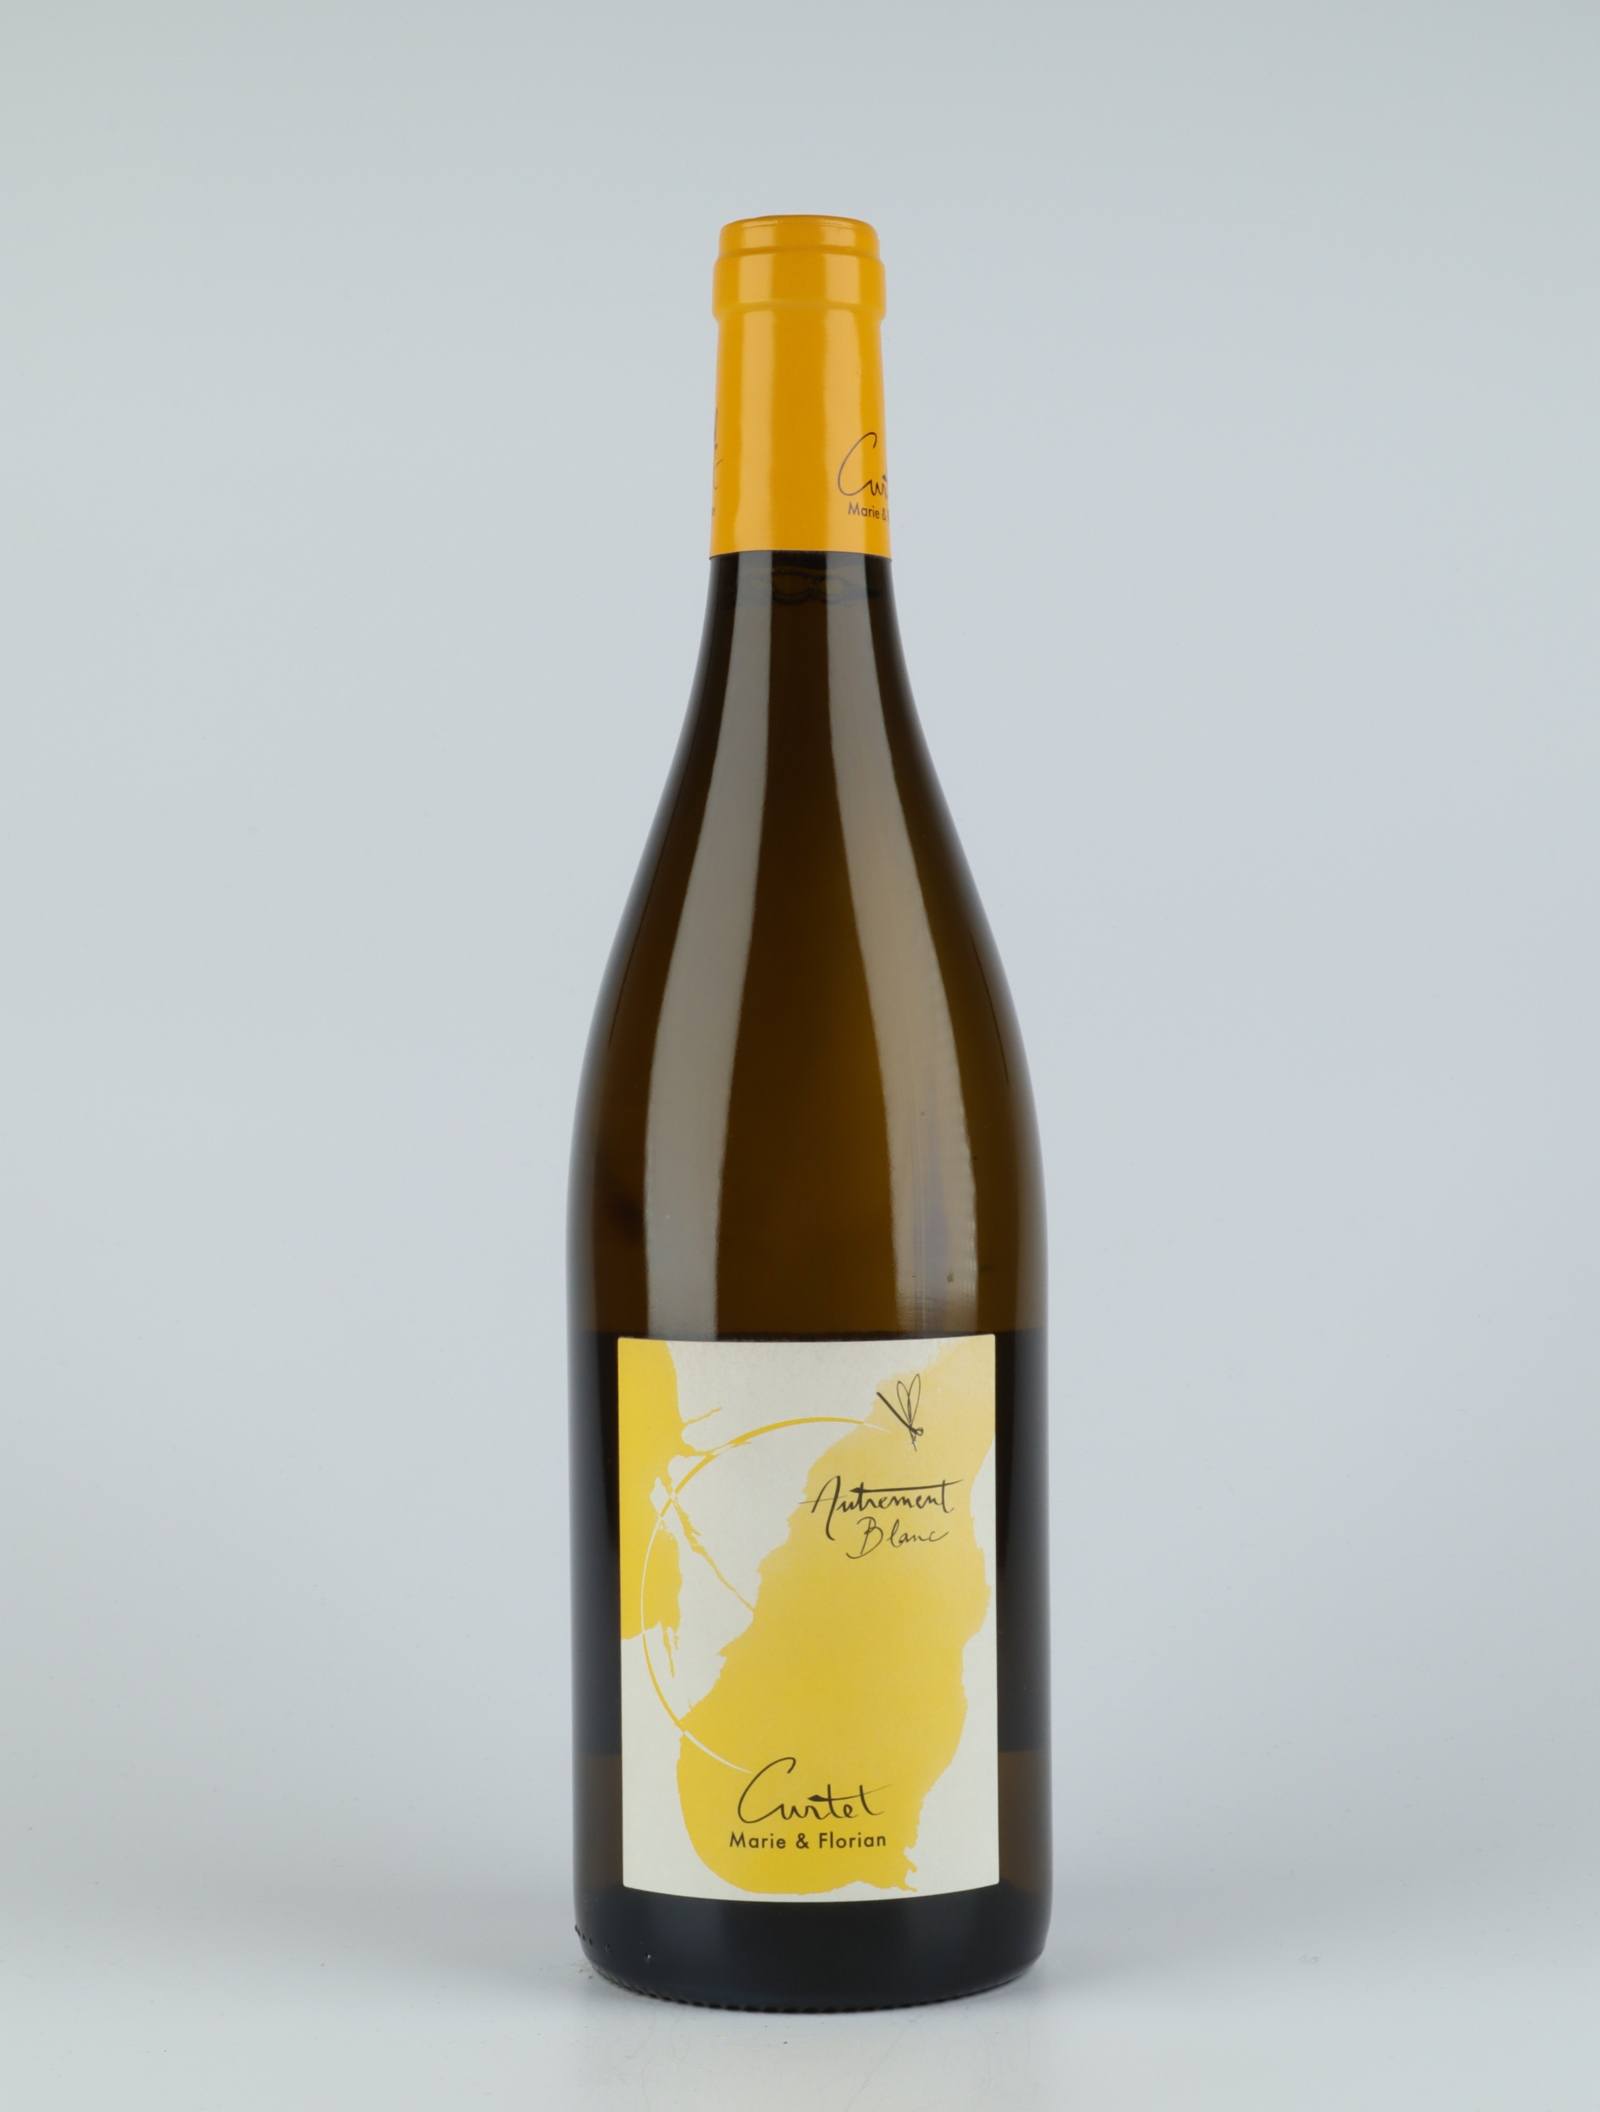 A bottle 2017 Autrement Blanc White wine from Domaine Curtet, Savoie in France